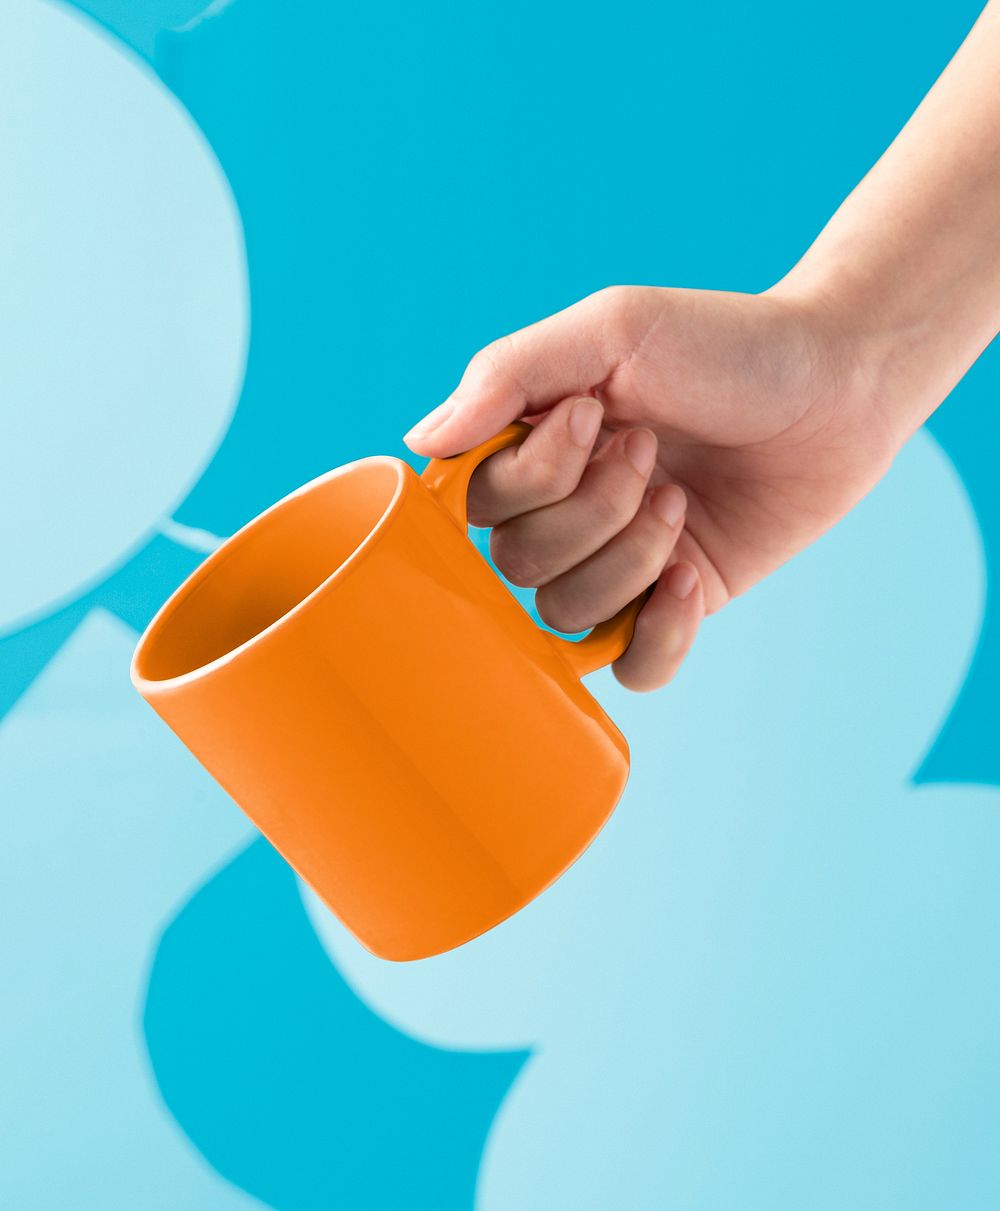 Hand holding orange coffee mug